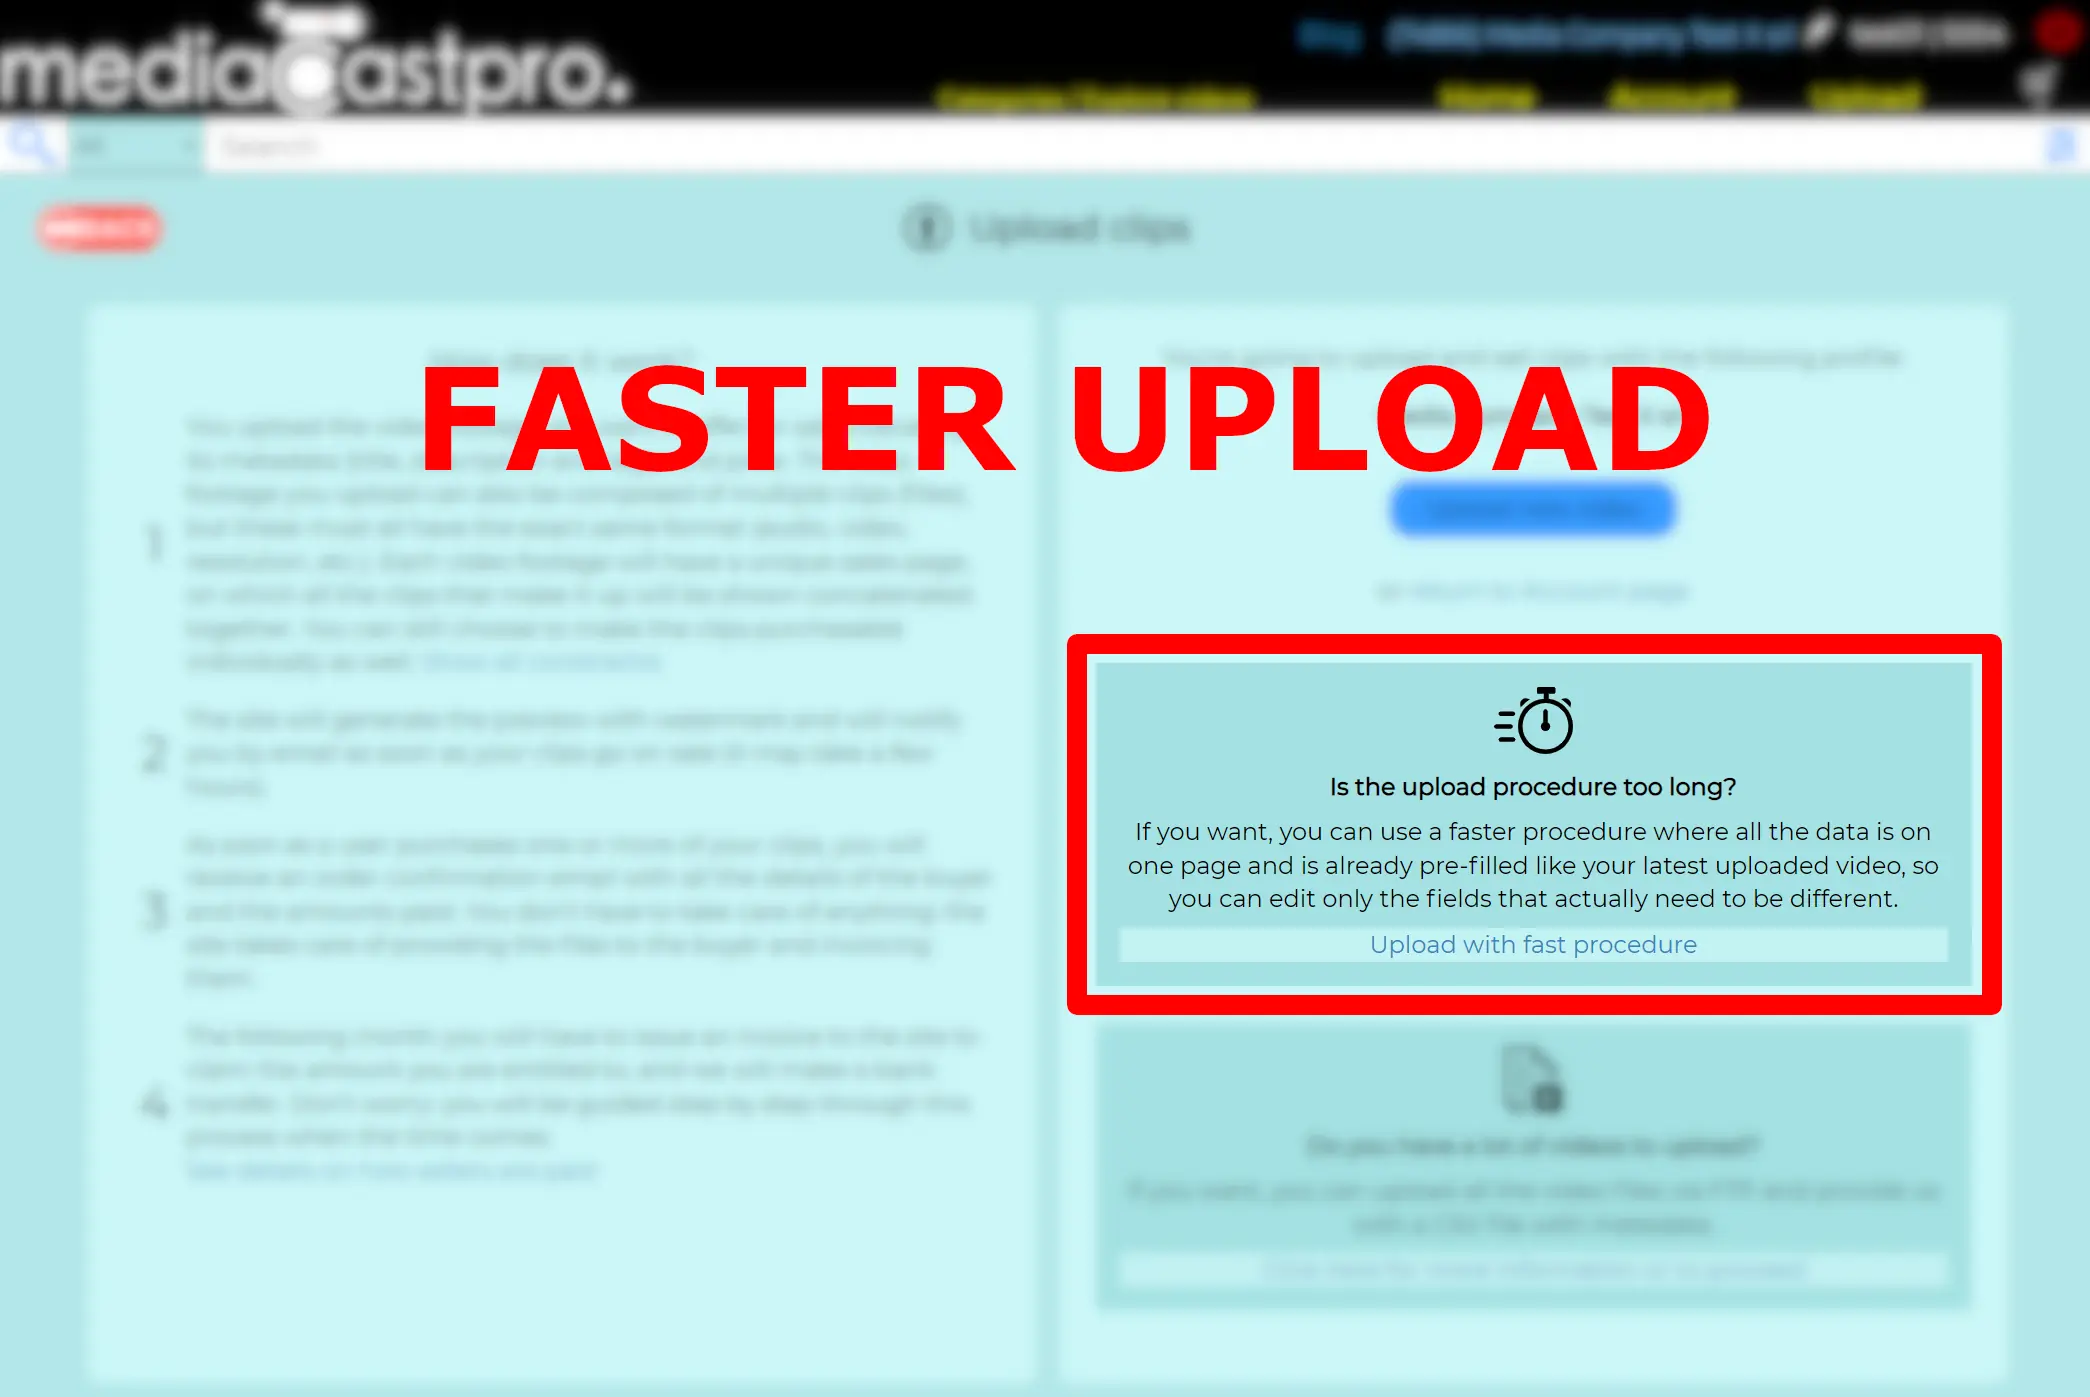 Uploading videos to mediaCastpro is now faster